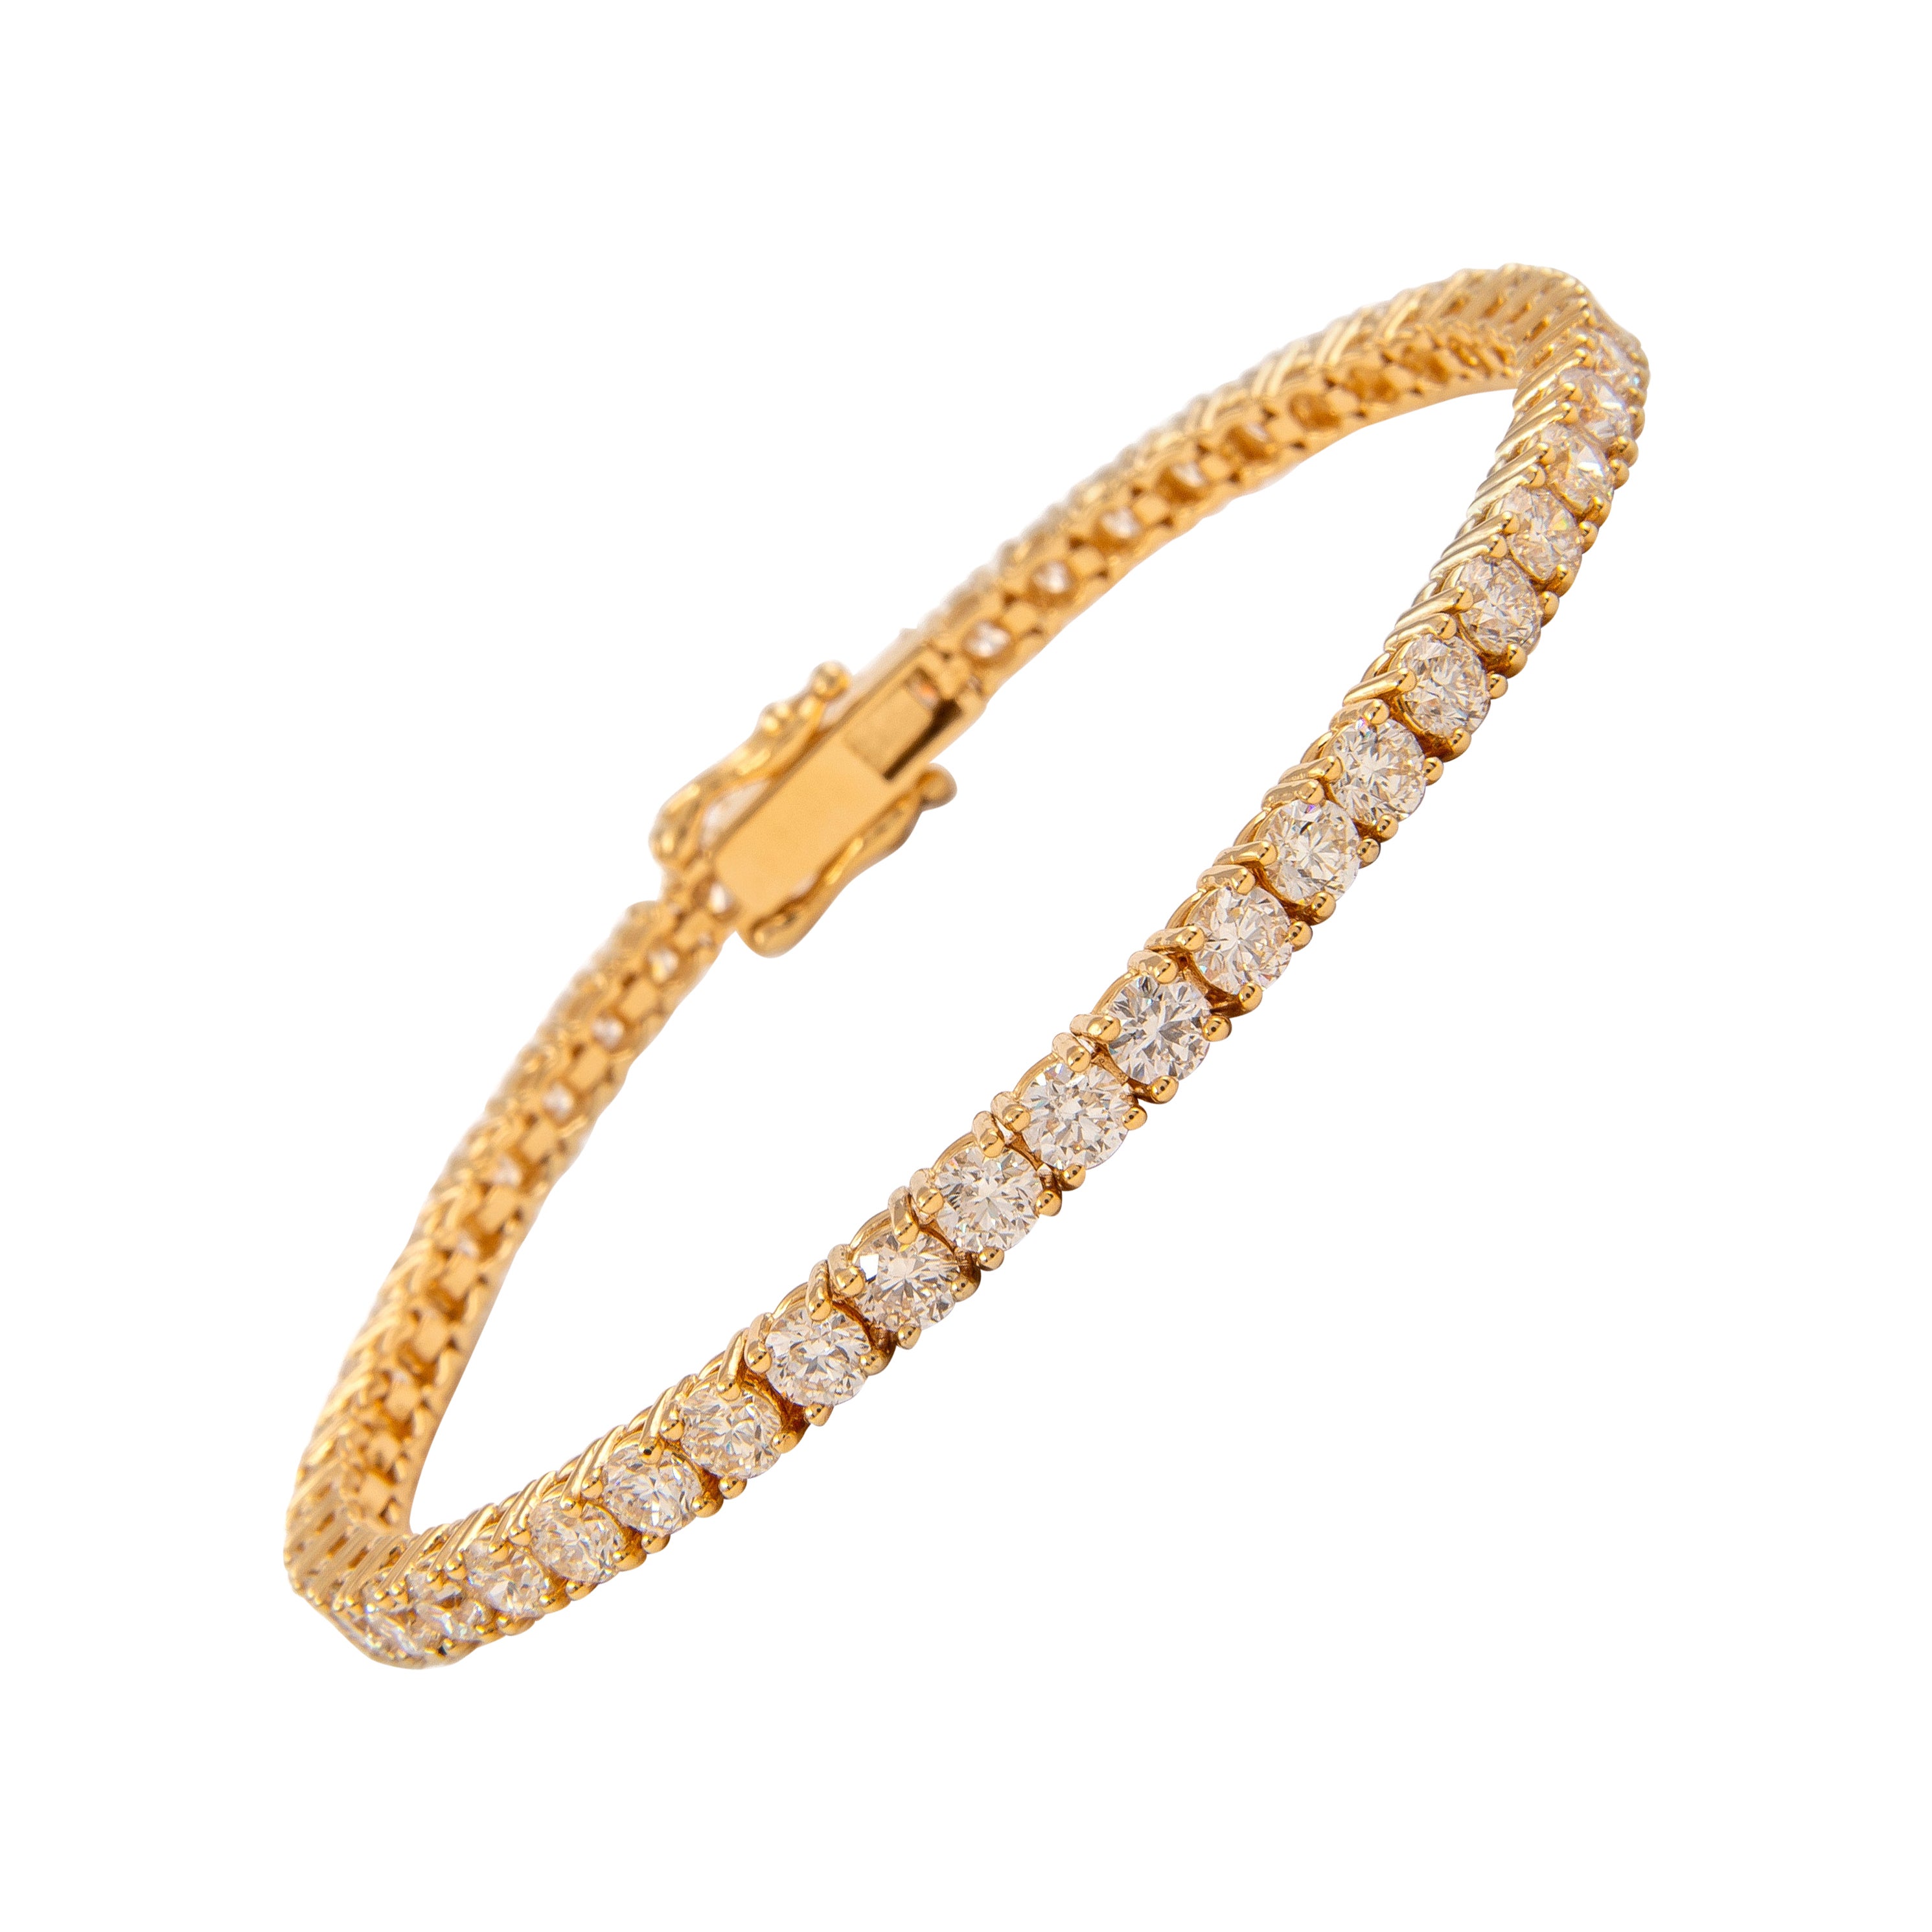 Alexander Bracelet tennis en or jaune 18 carats avec diamants de 8,78 carats